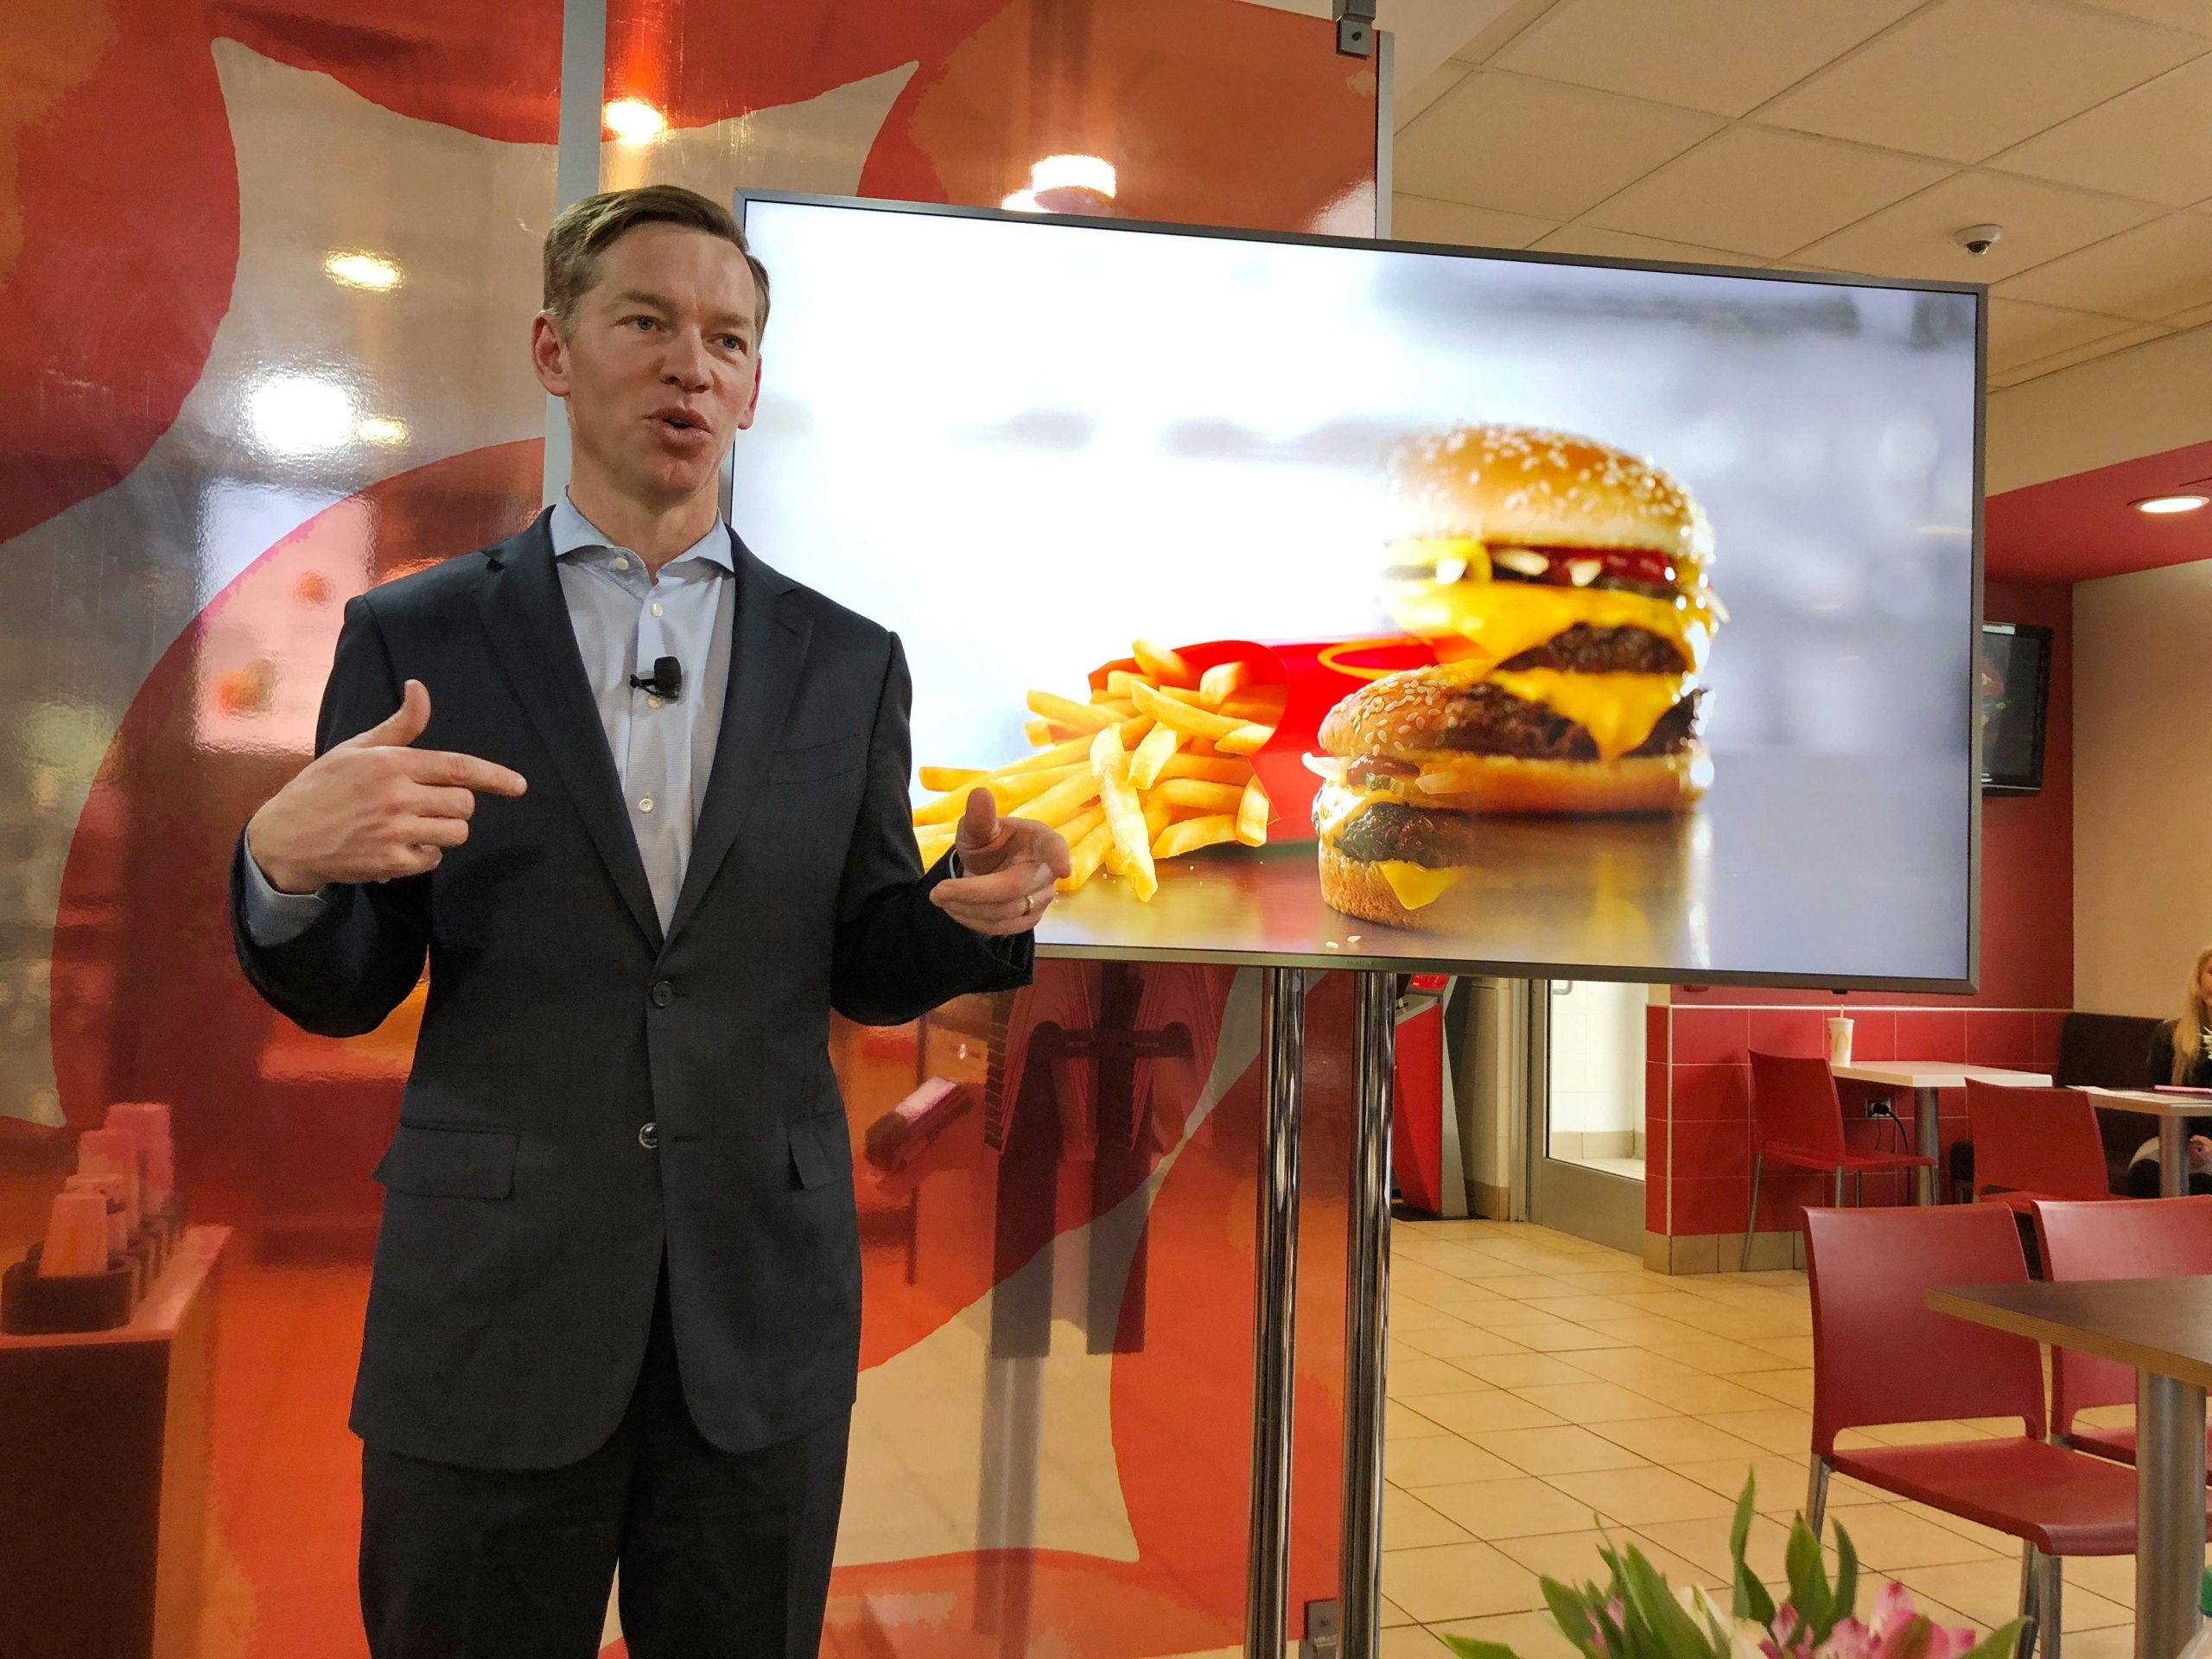 McDonald's U.S President Chris Kempczinski fresh beef